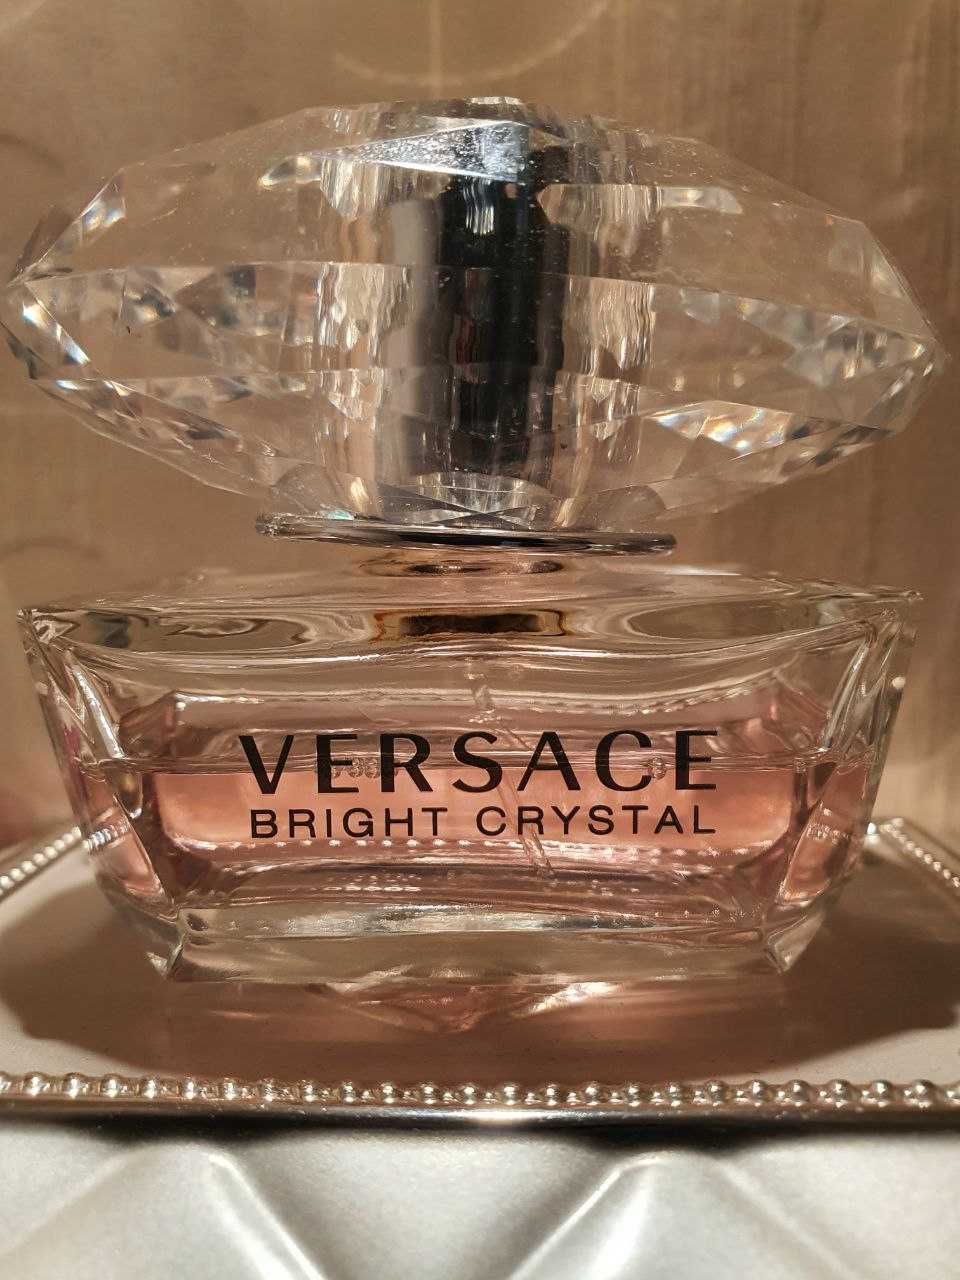 Versace Bright Crystal 30,Dolce & Gabbana Light Blue 100,Lancome Idole